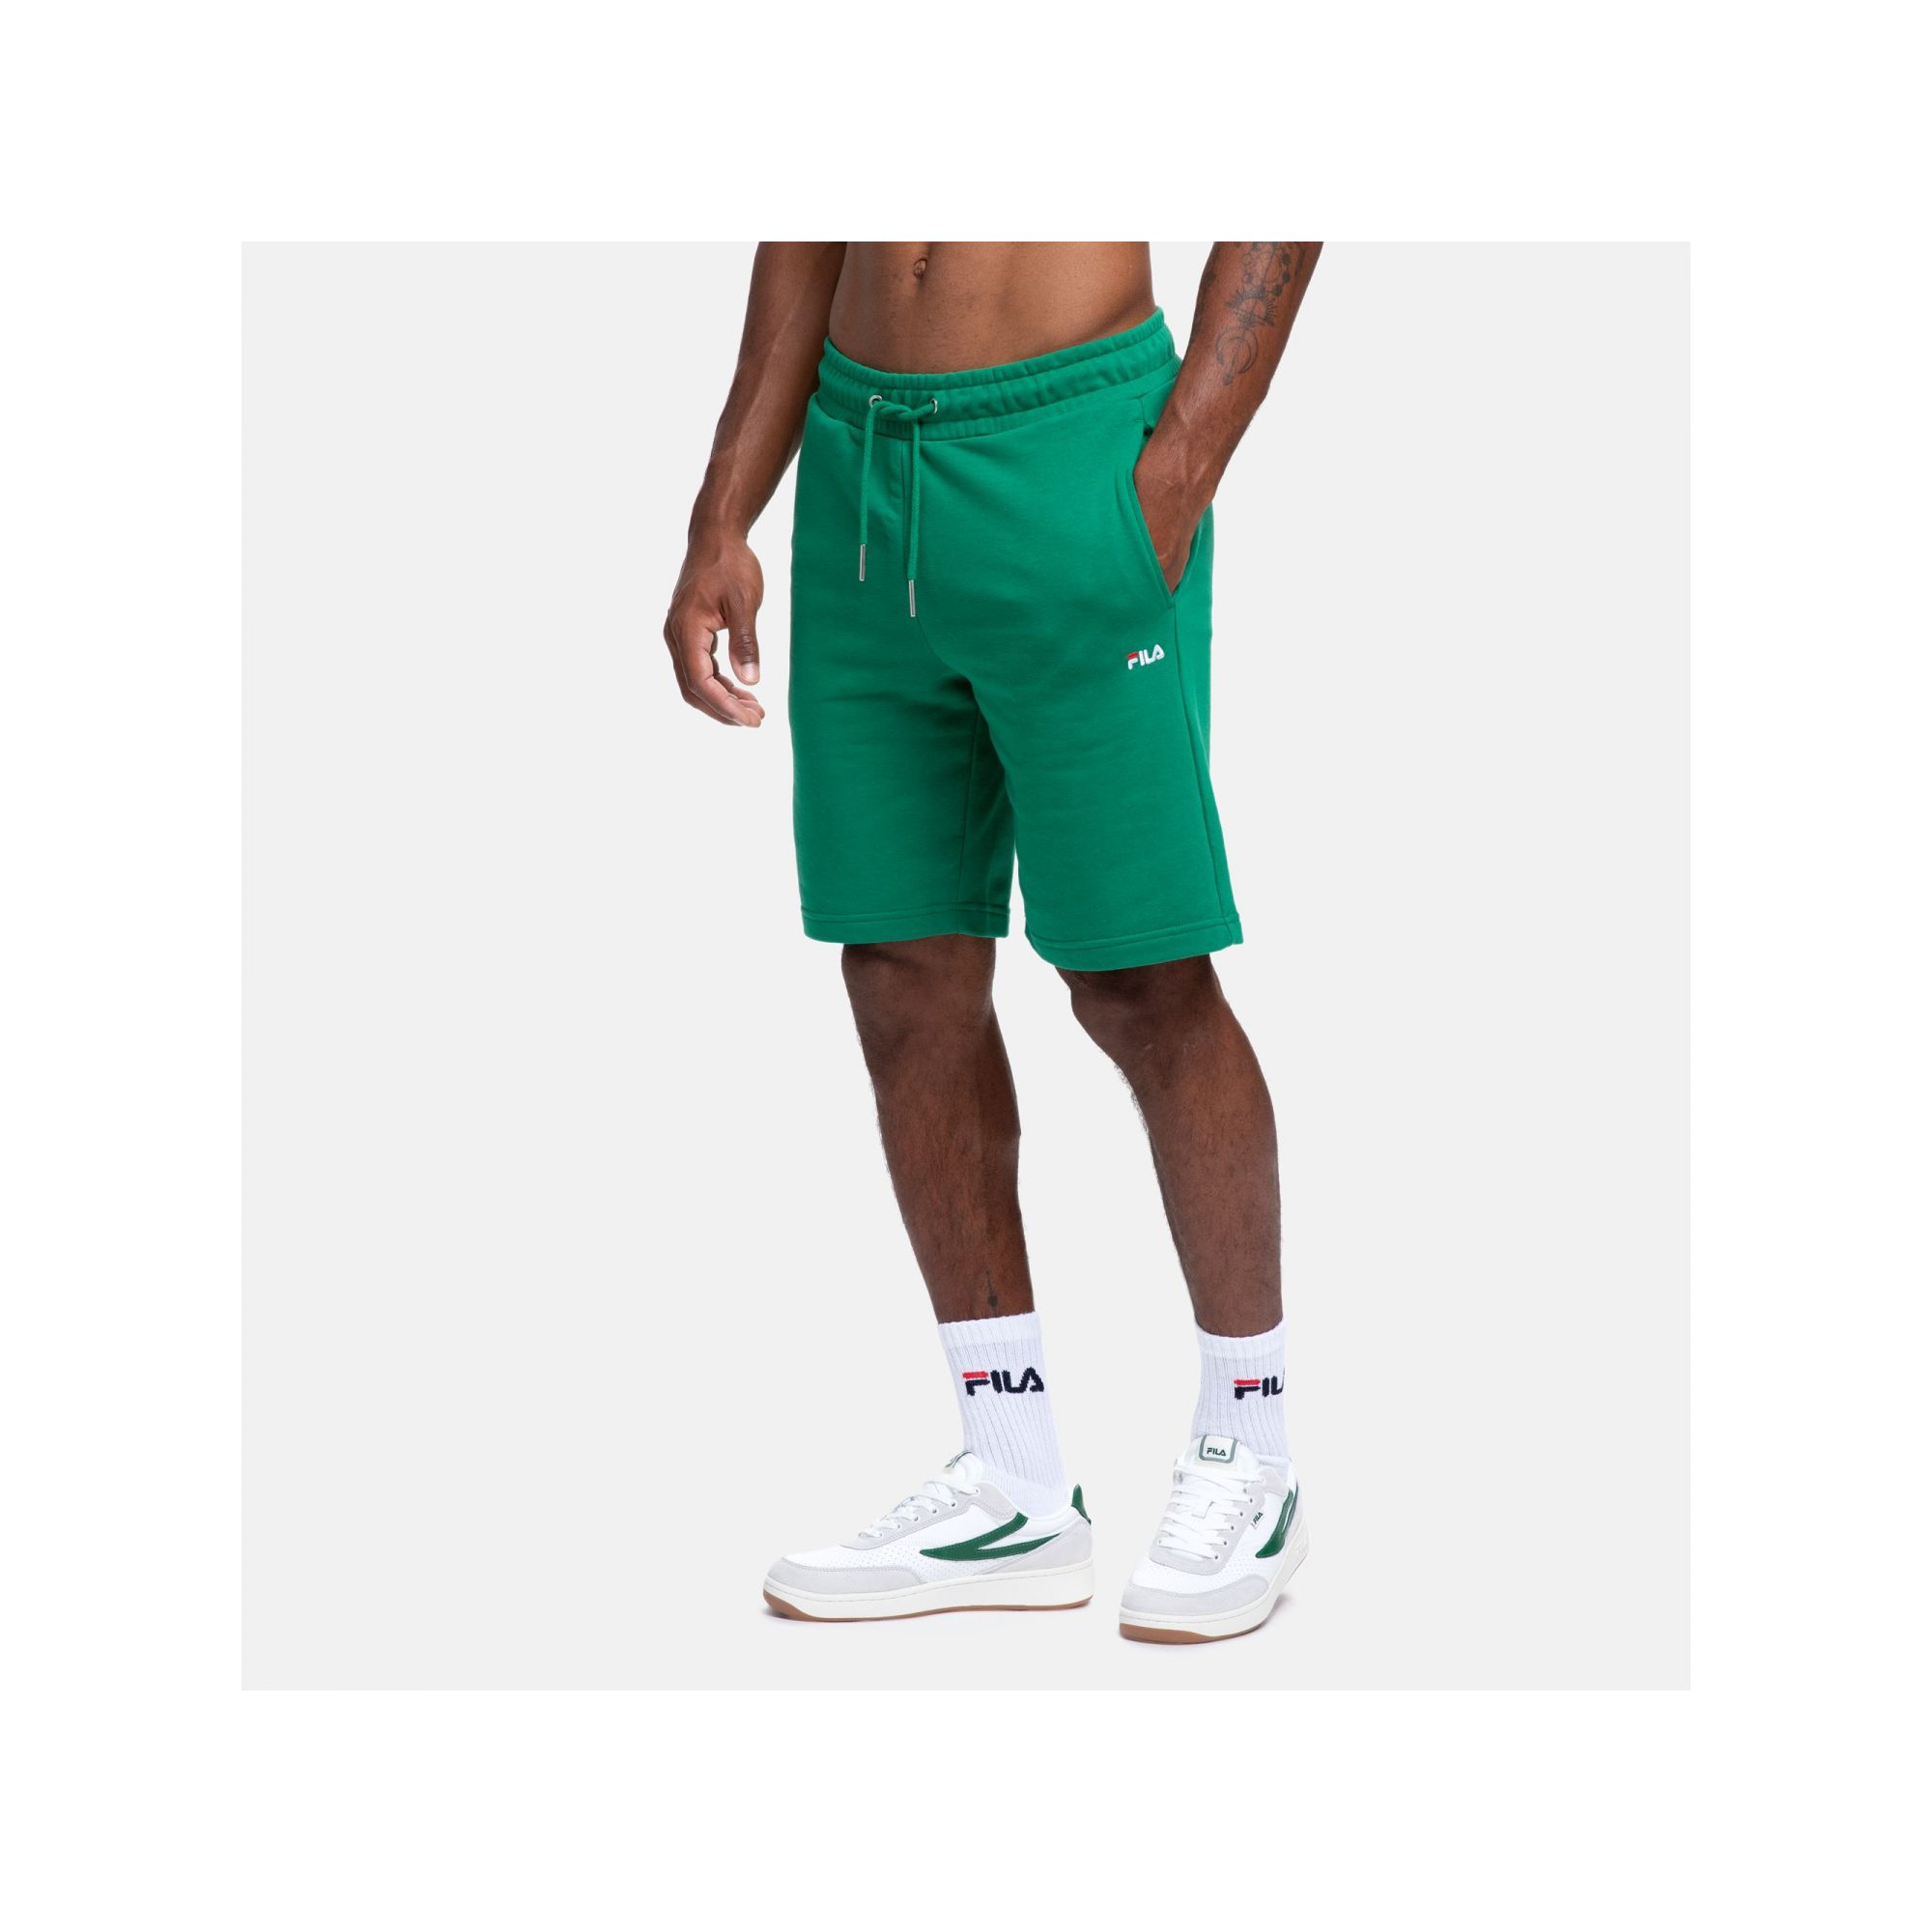 BLEHEN sweat shorts verde